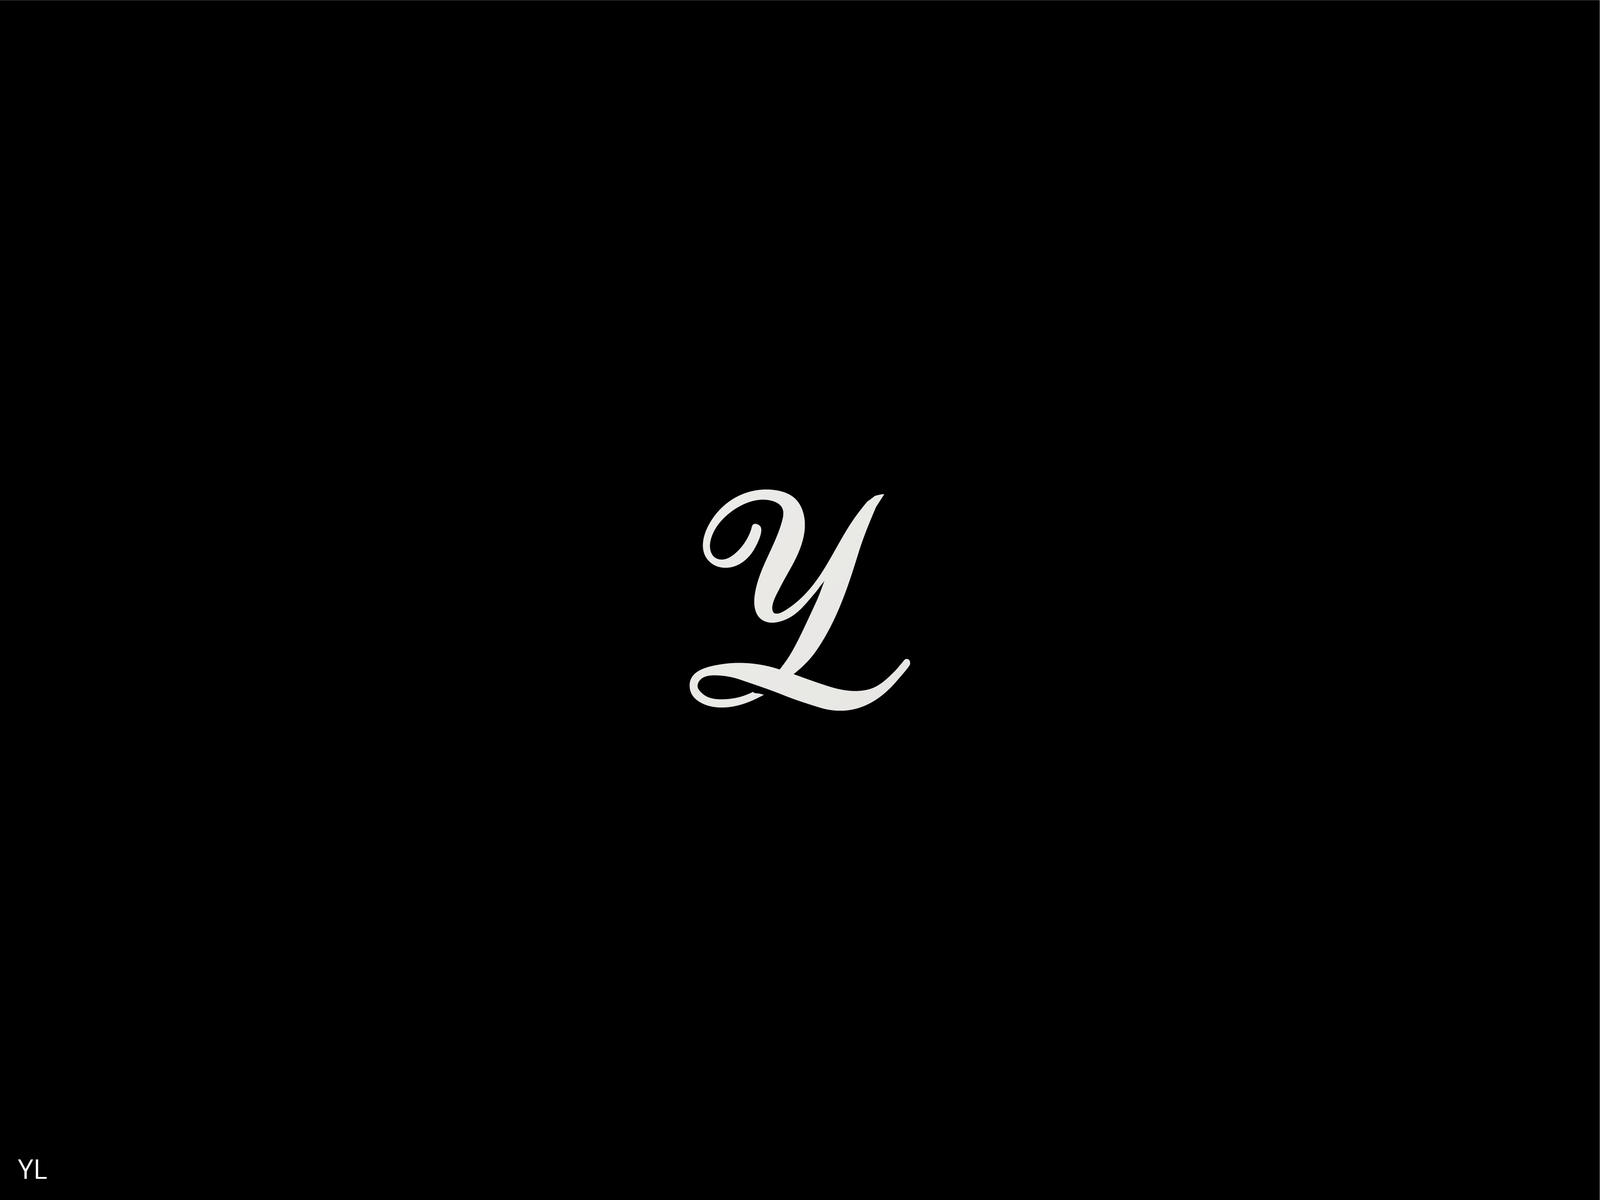 Monogram YL by G R A N J on Dribbble